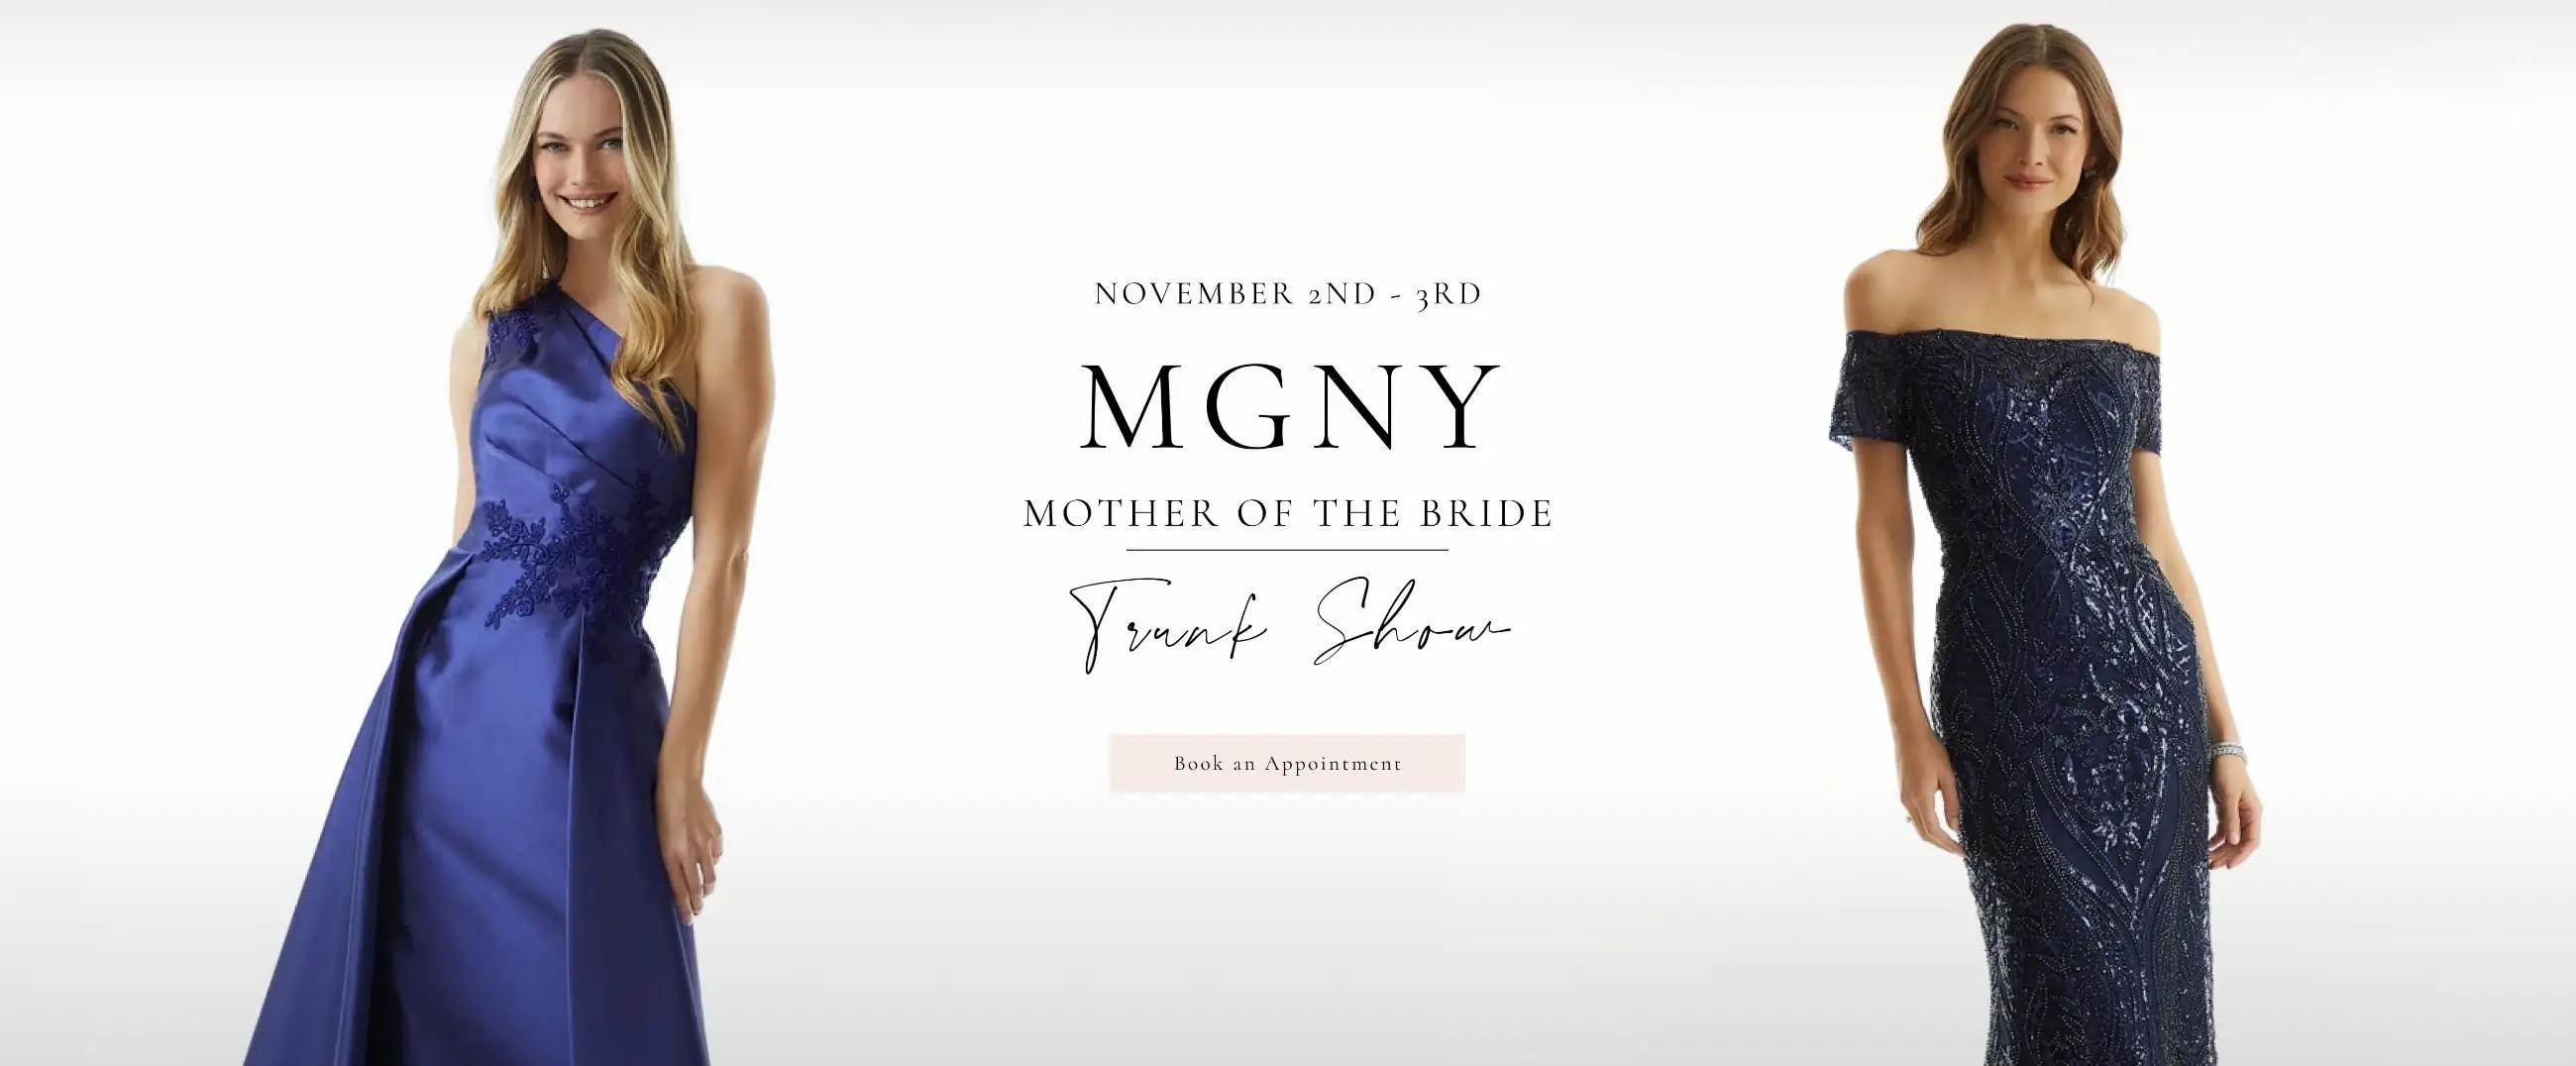 MGNY event desktop banner